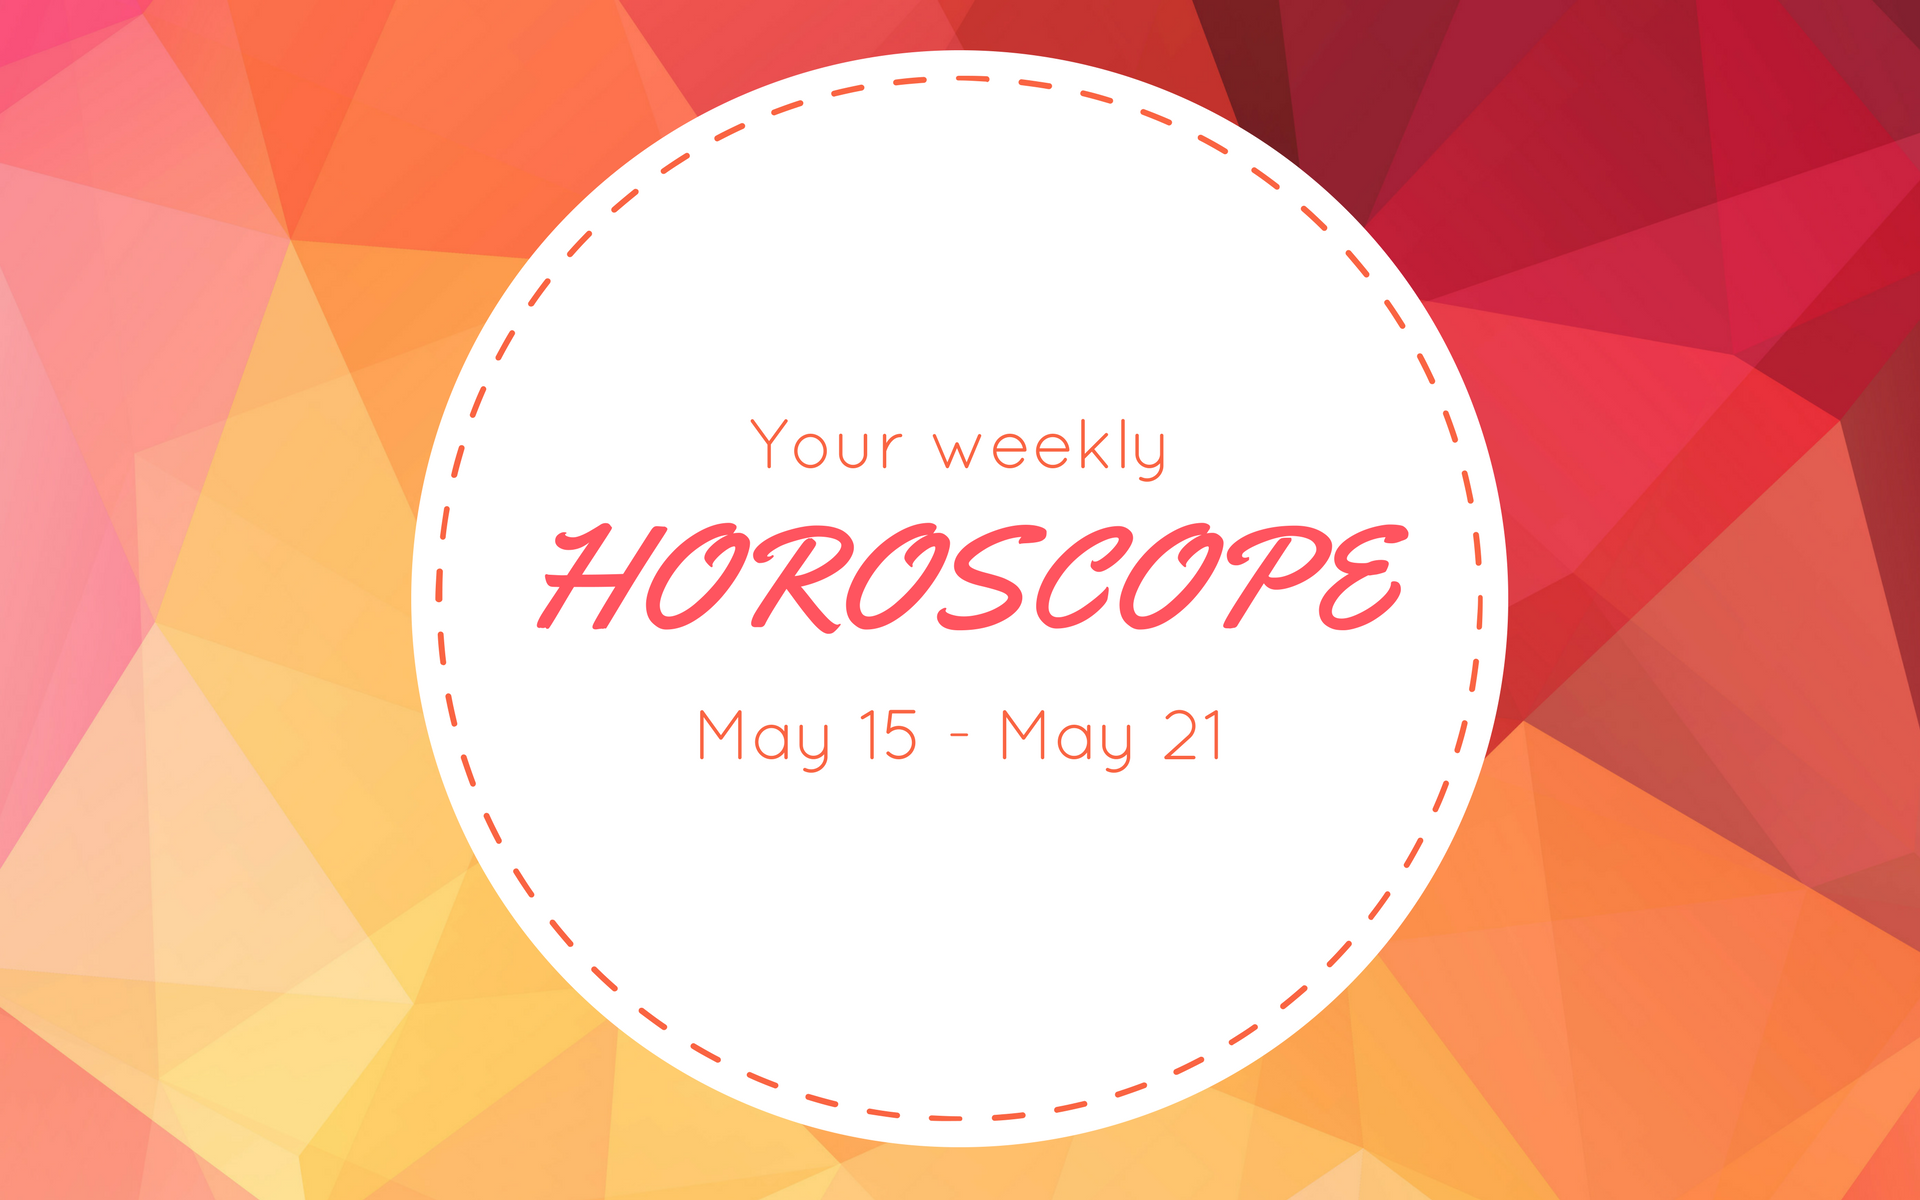 Your Weekly Horoscope: May 15 - May 21